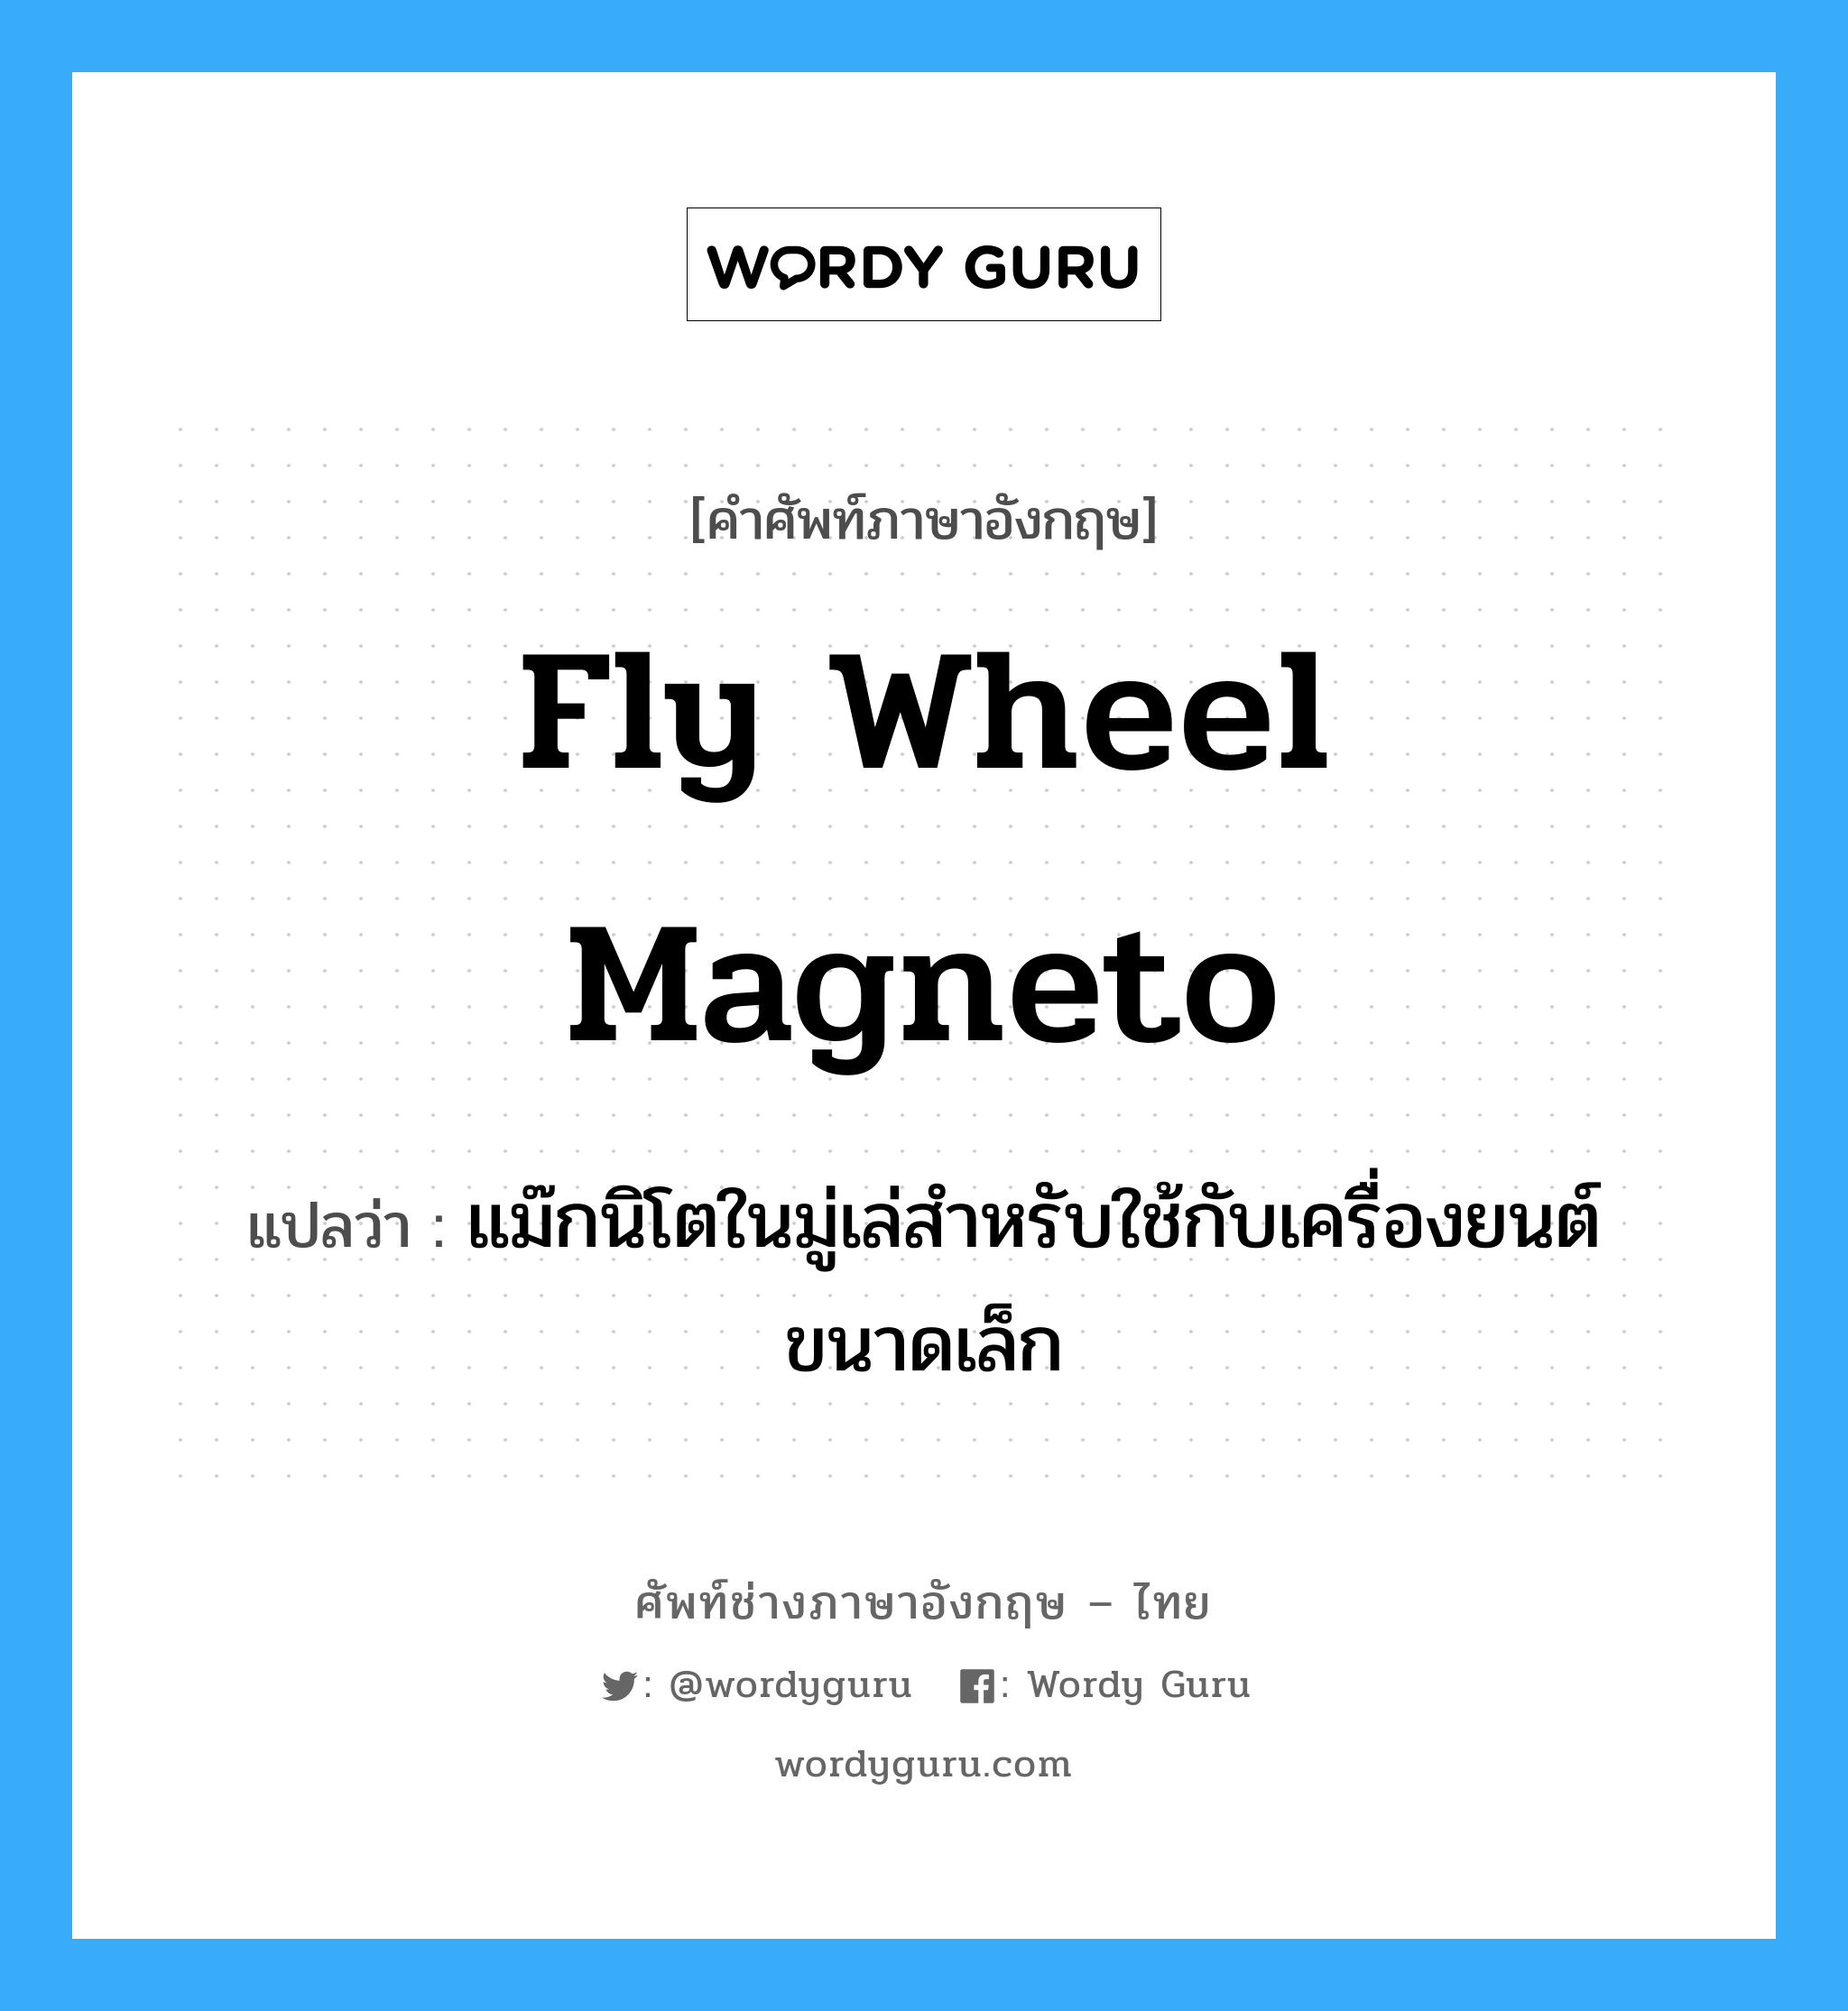 fly wheel magneto แปลว่า?, คำศัพท์ช่างภาษาอังกฤษ - ไทย fly wheel magneto คำศัพท์ภาษาอังกฤษ fly wheel magneto แปลว่า แม๊กนิโตในมู่เล่สำหรับใช้กับเครื่องยนต์ขนาดเล็ก